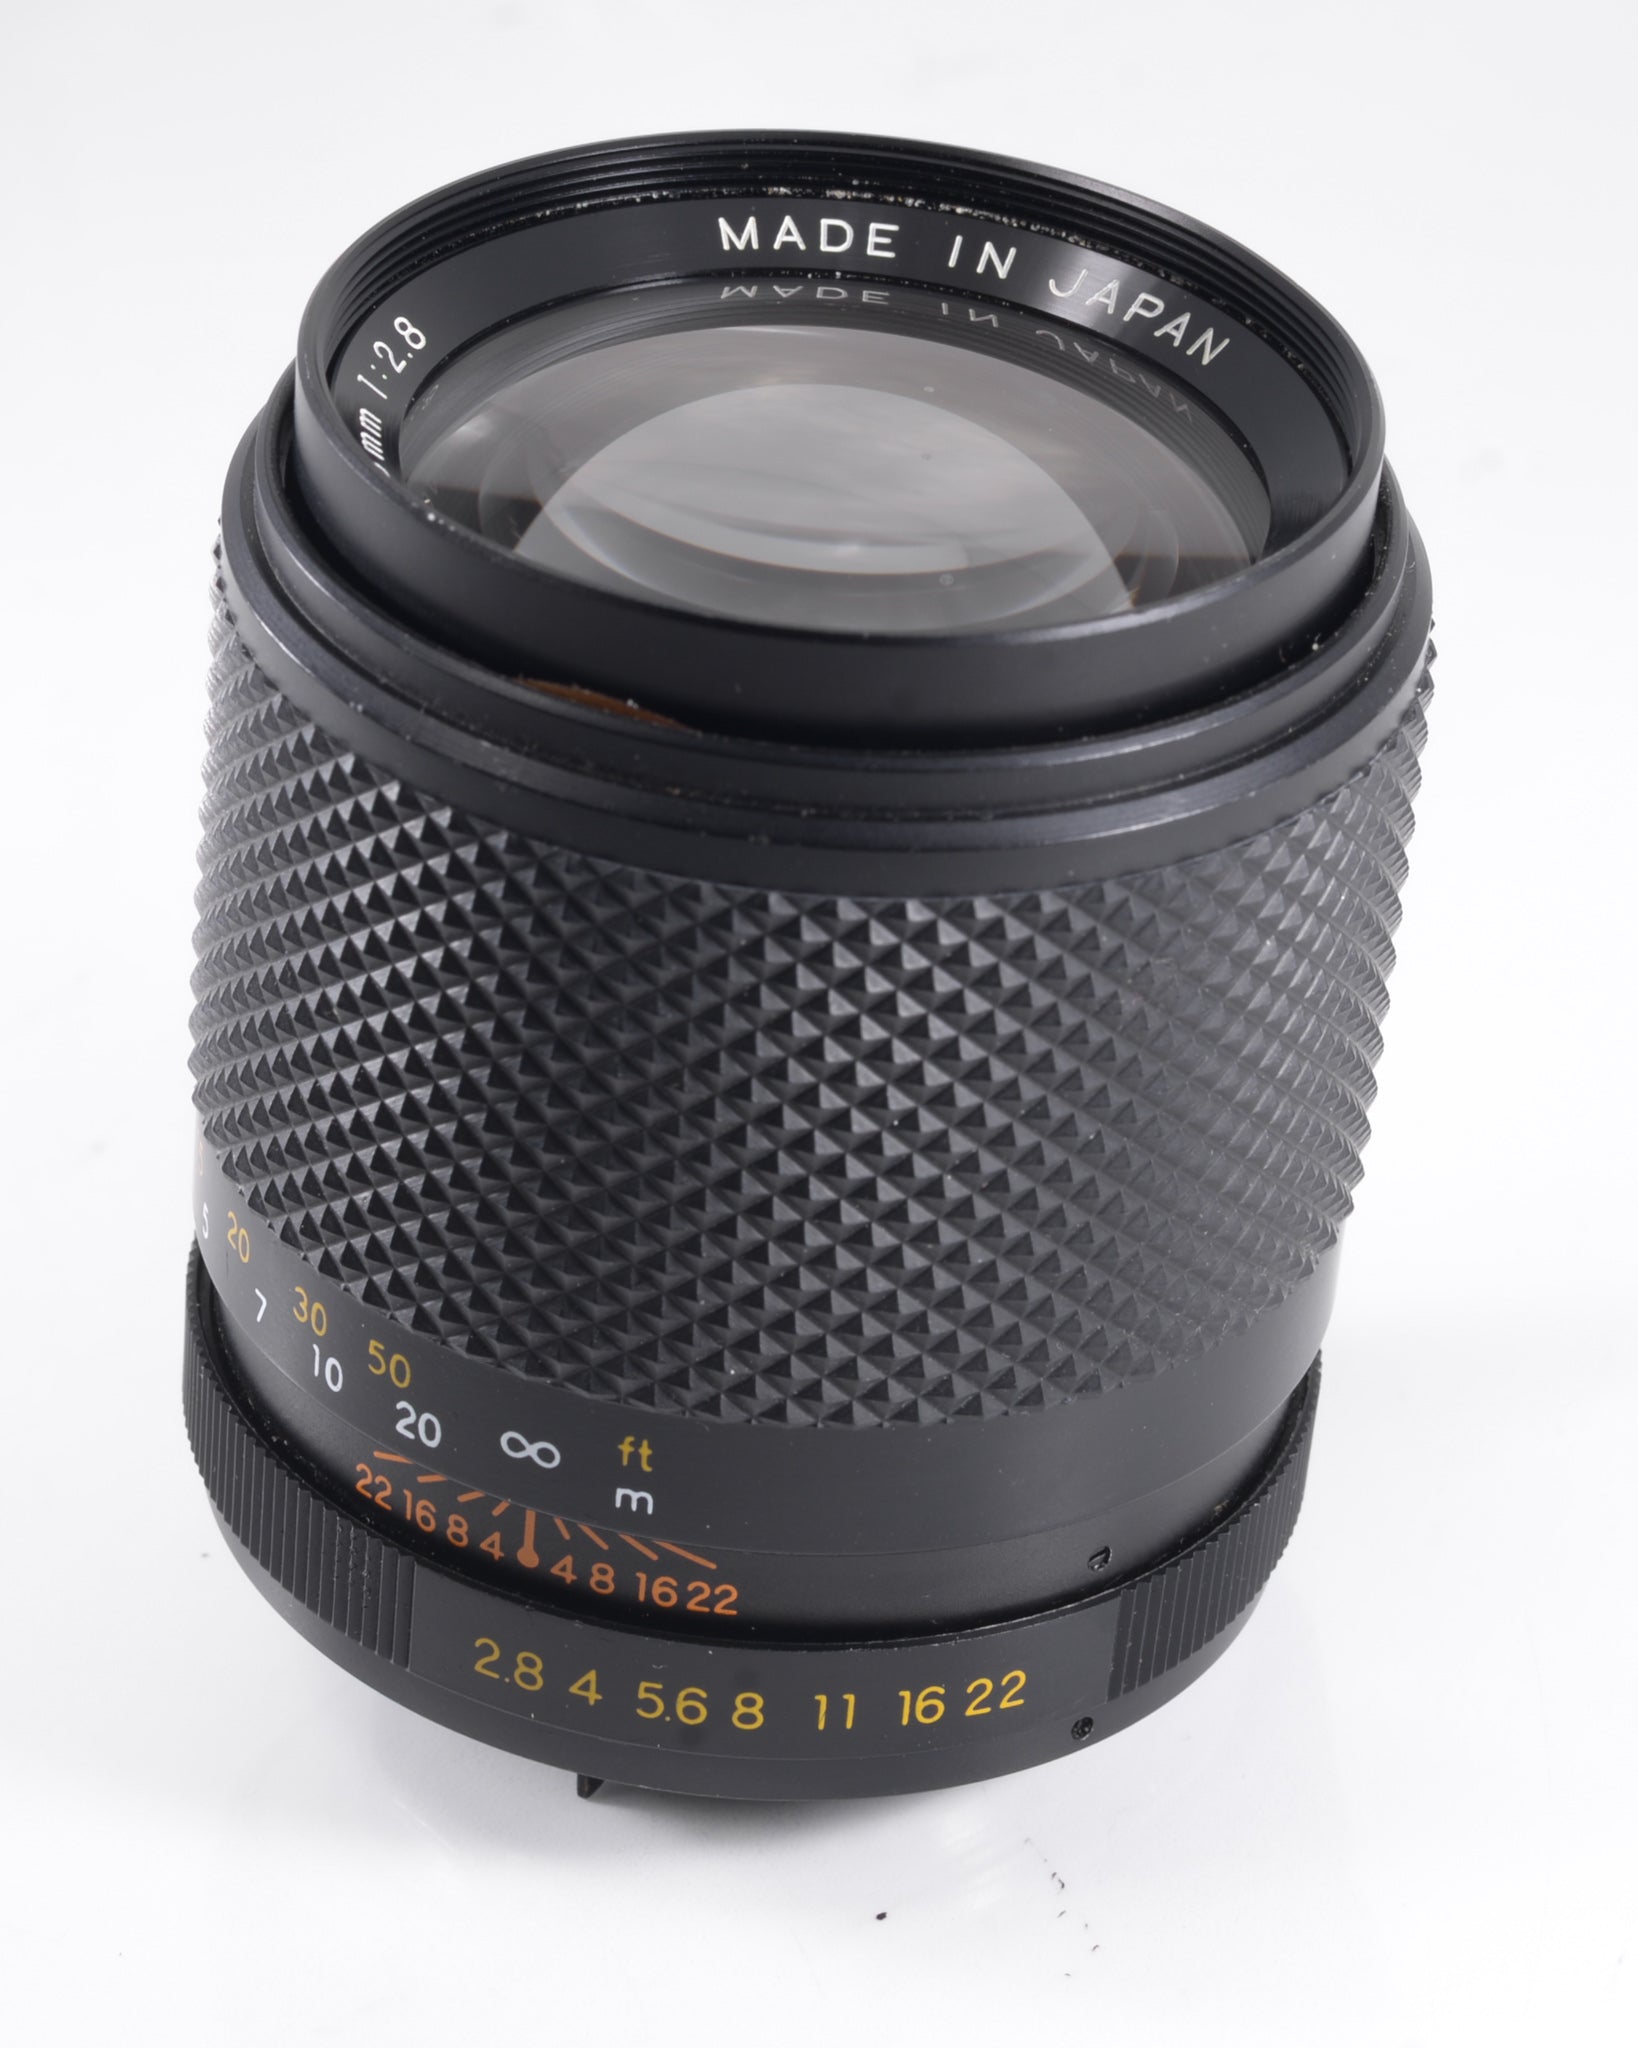 Yashica DSB 135mm f2.8 C/Y lens